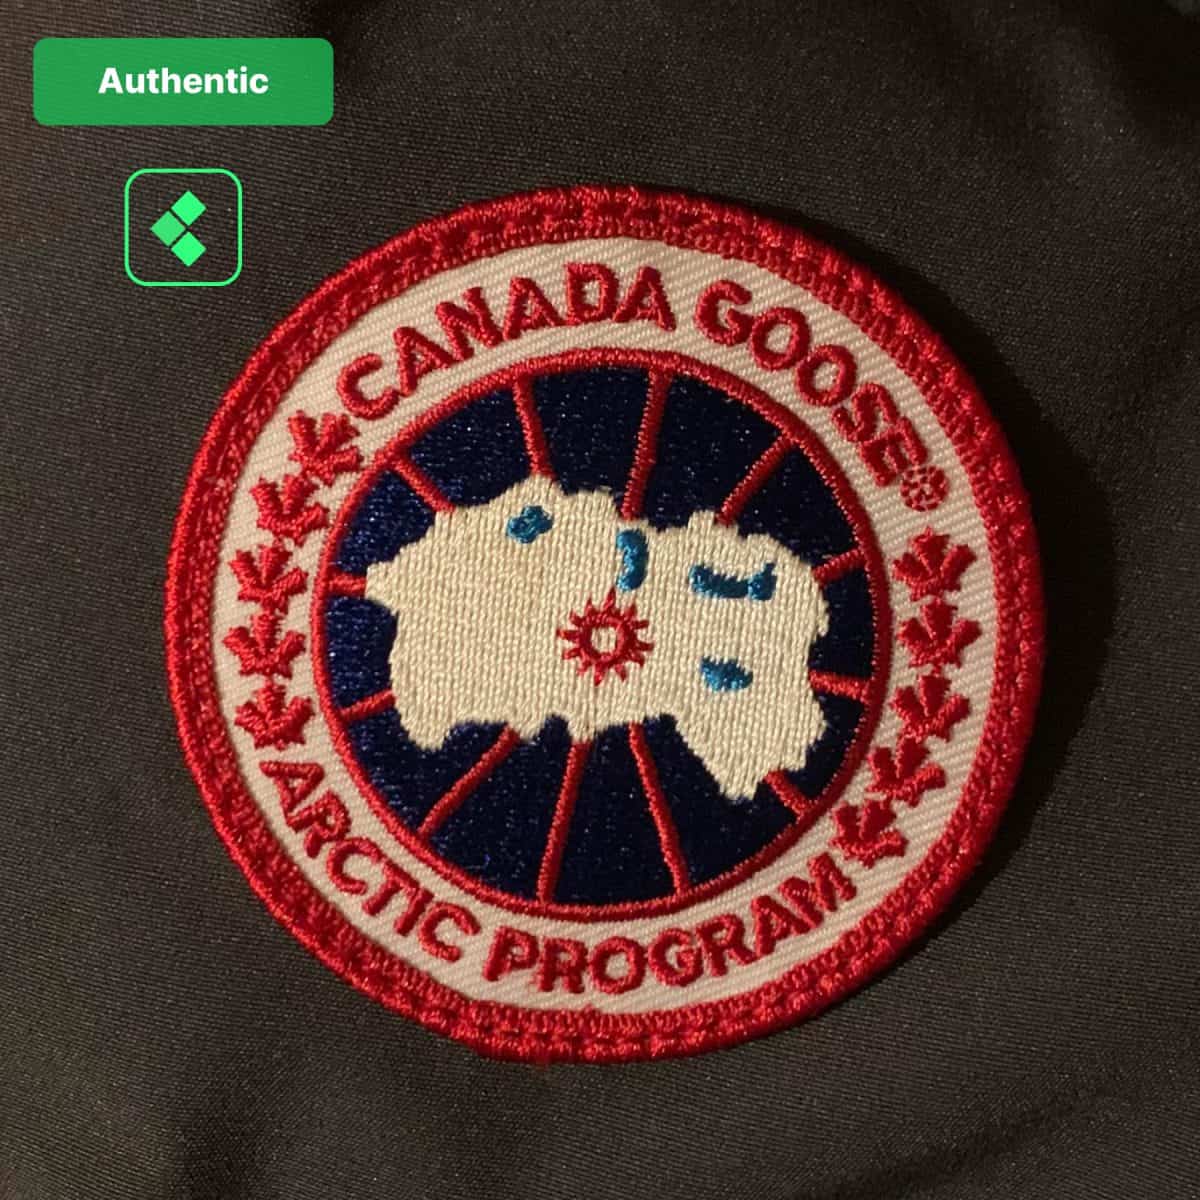 Canada Goose Jacket - Authentic Older Model Badge